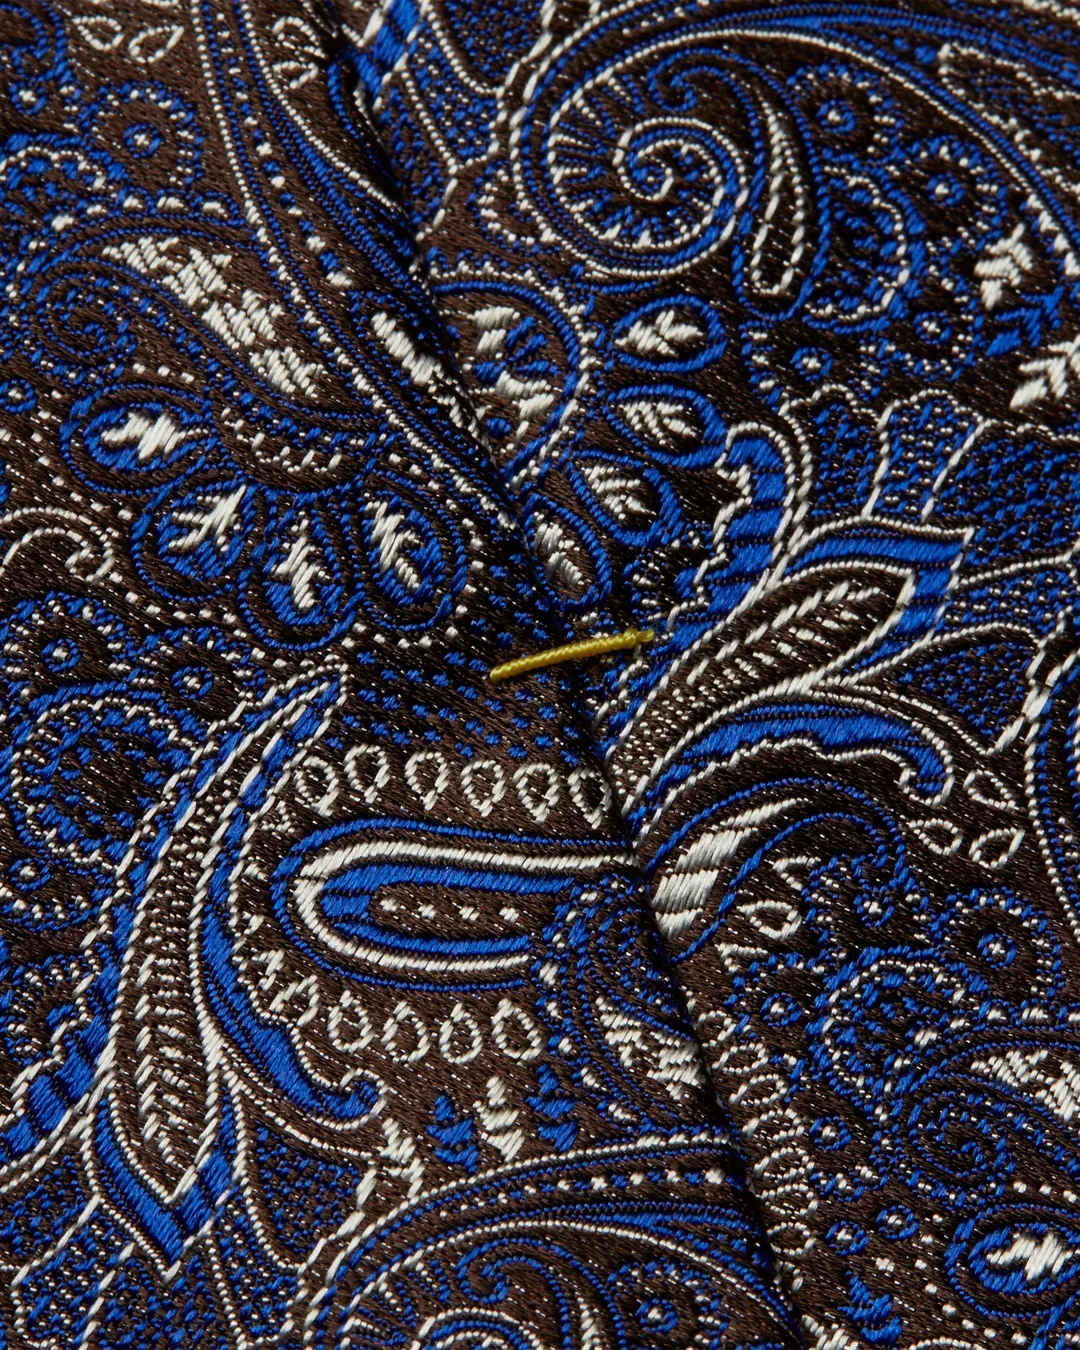 Silk braces with buttonholes, tone-on-tone blue paisley pattern